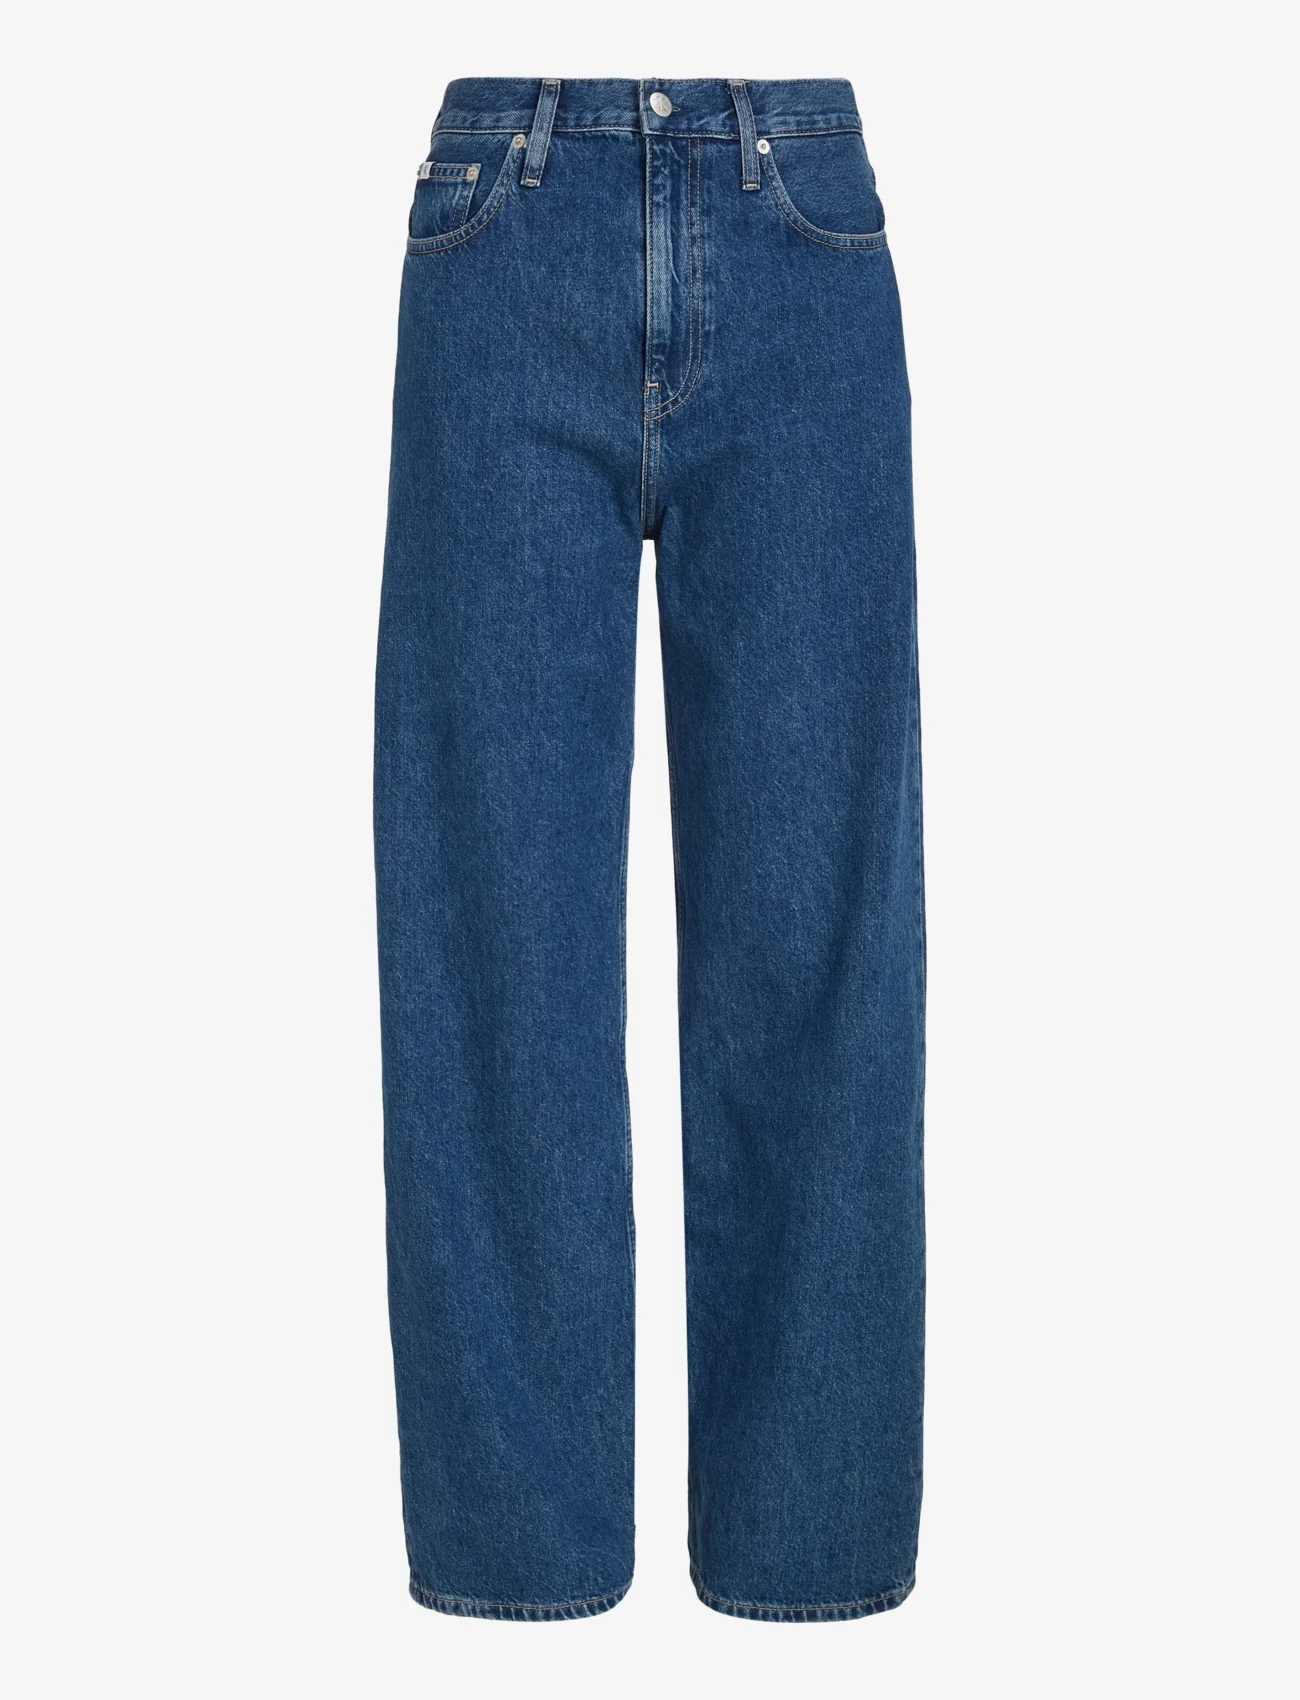 Calvin Klein Jeans - HIGH RISE RELAXED - tiesaus kirpimo džinsai - denim medium - 0